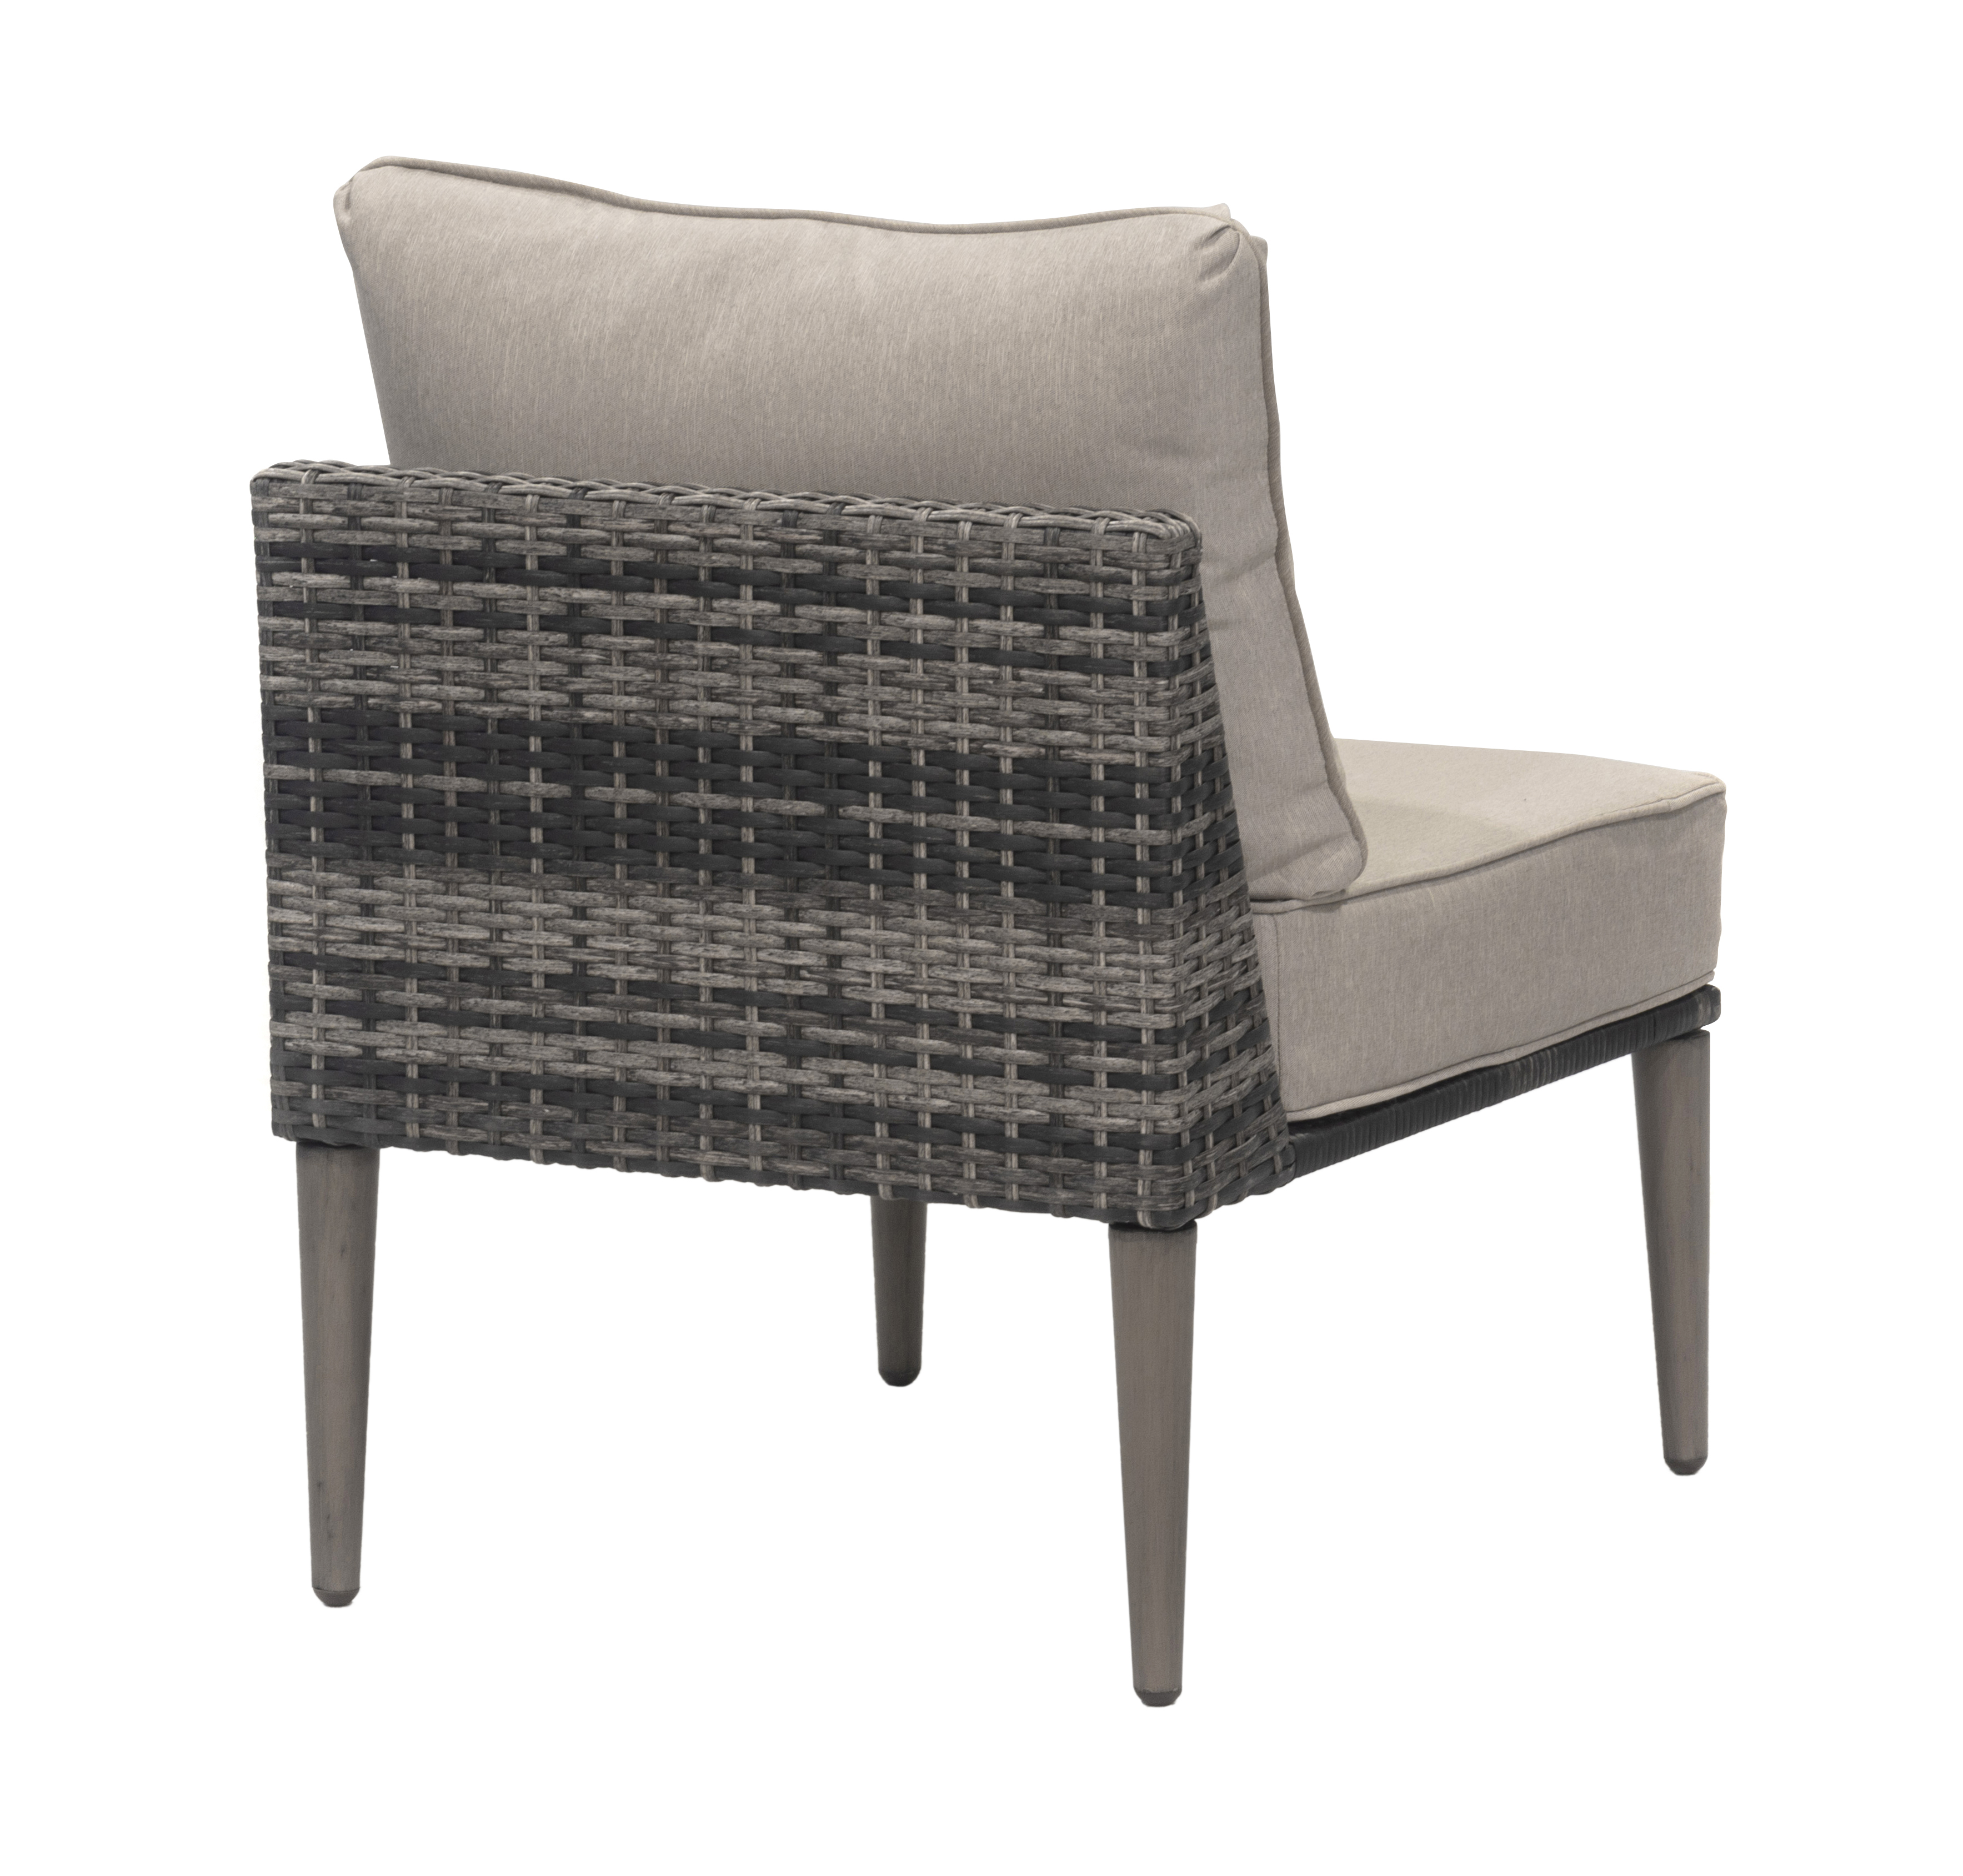 Donglin Outdoor Patio Furniture Sutton Creek 7-Piece Steel Sectional Sofa PE Wicker Rattan Set,Gray - image 12 of 16